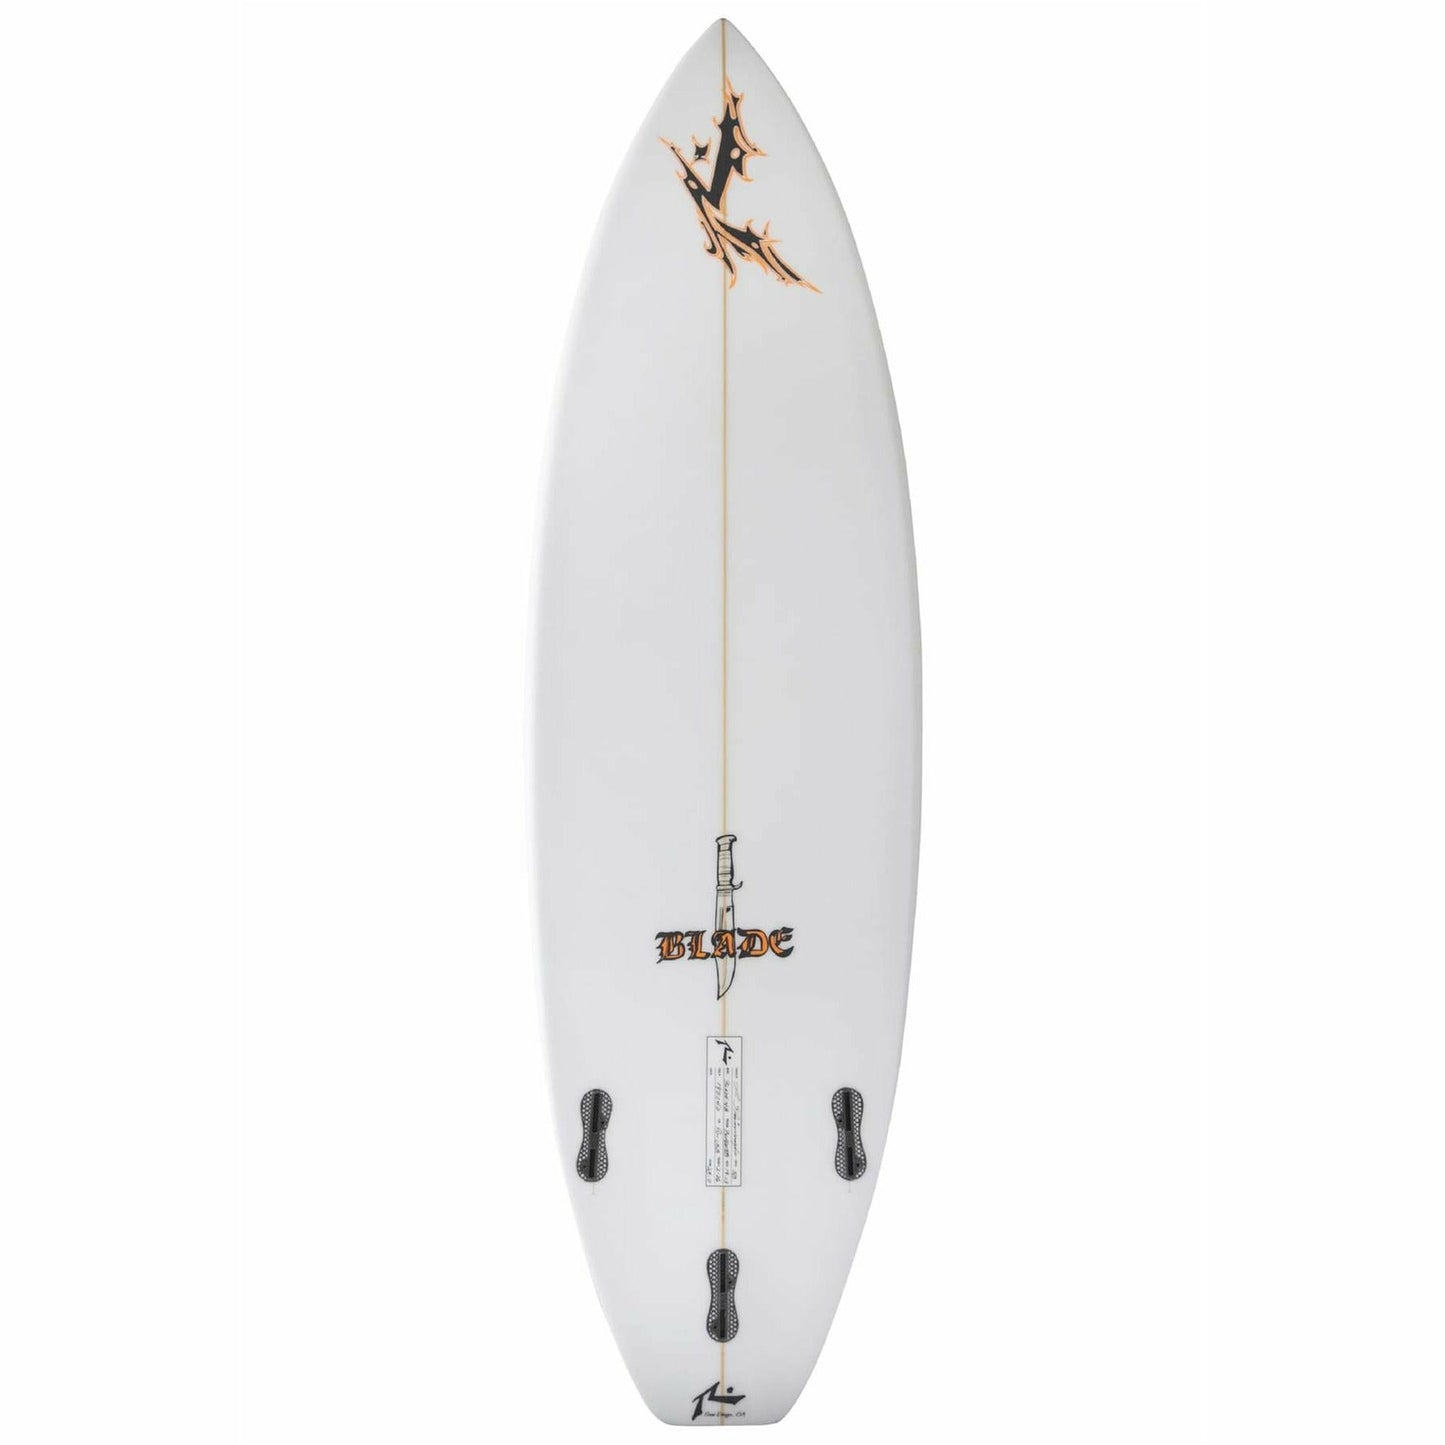 Rusty - The Blade Surfboard